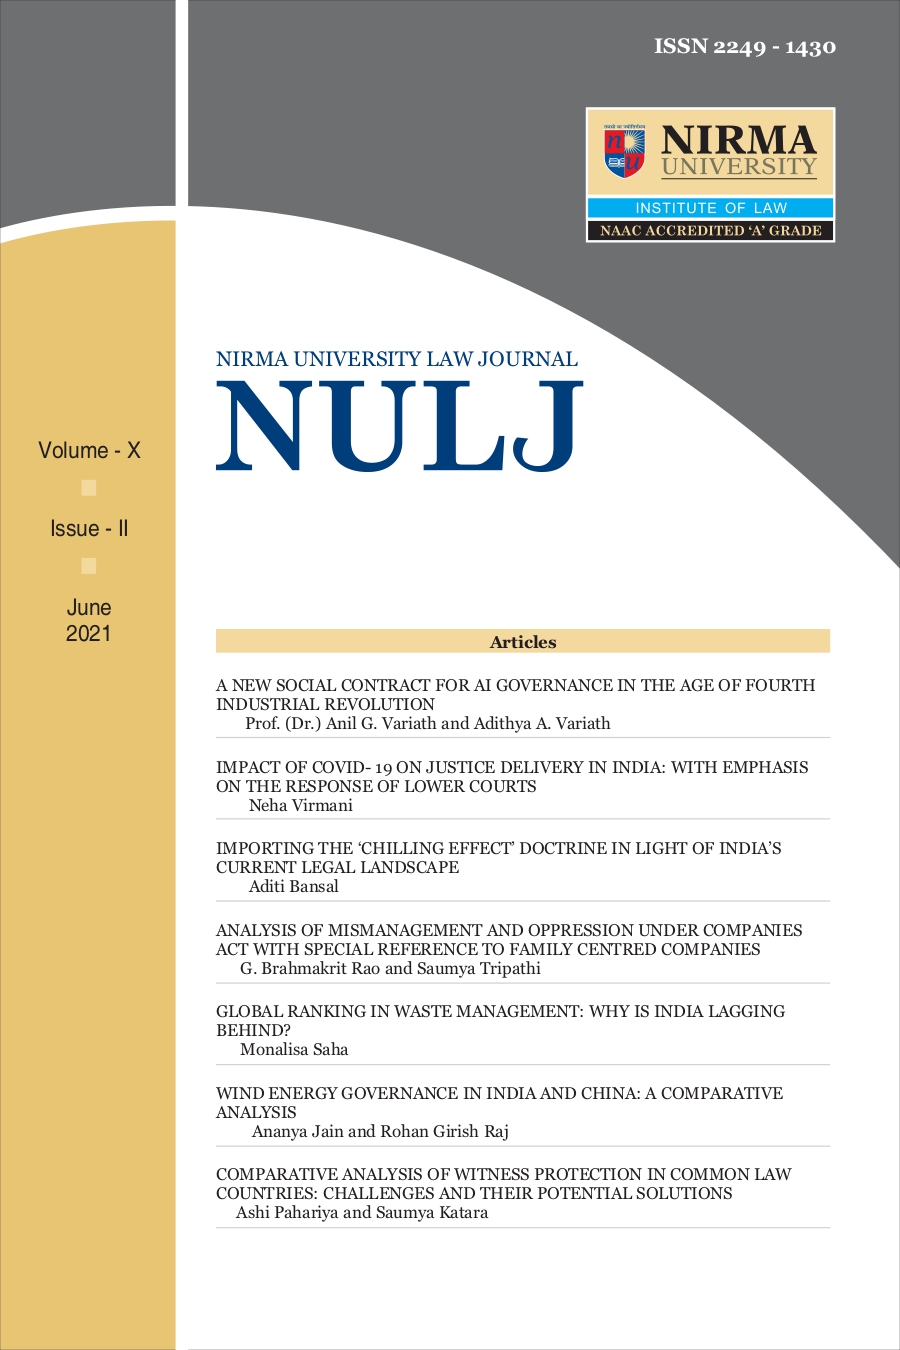 NULJ Volume X, Issue II, June 2021